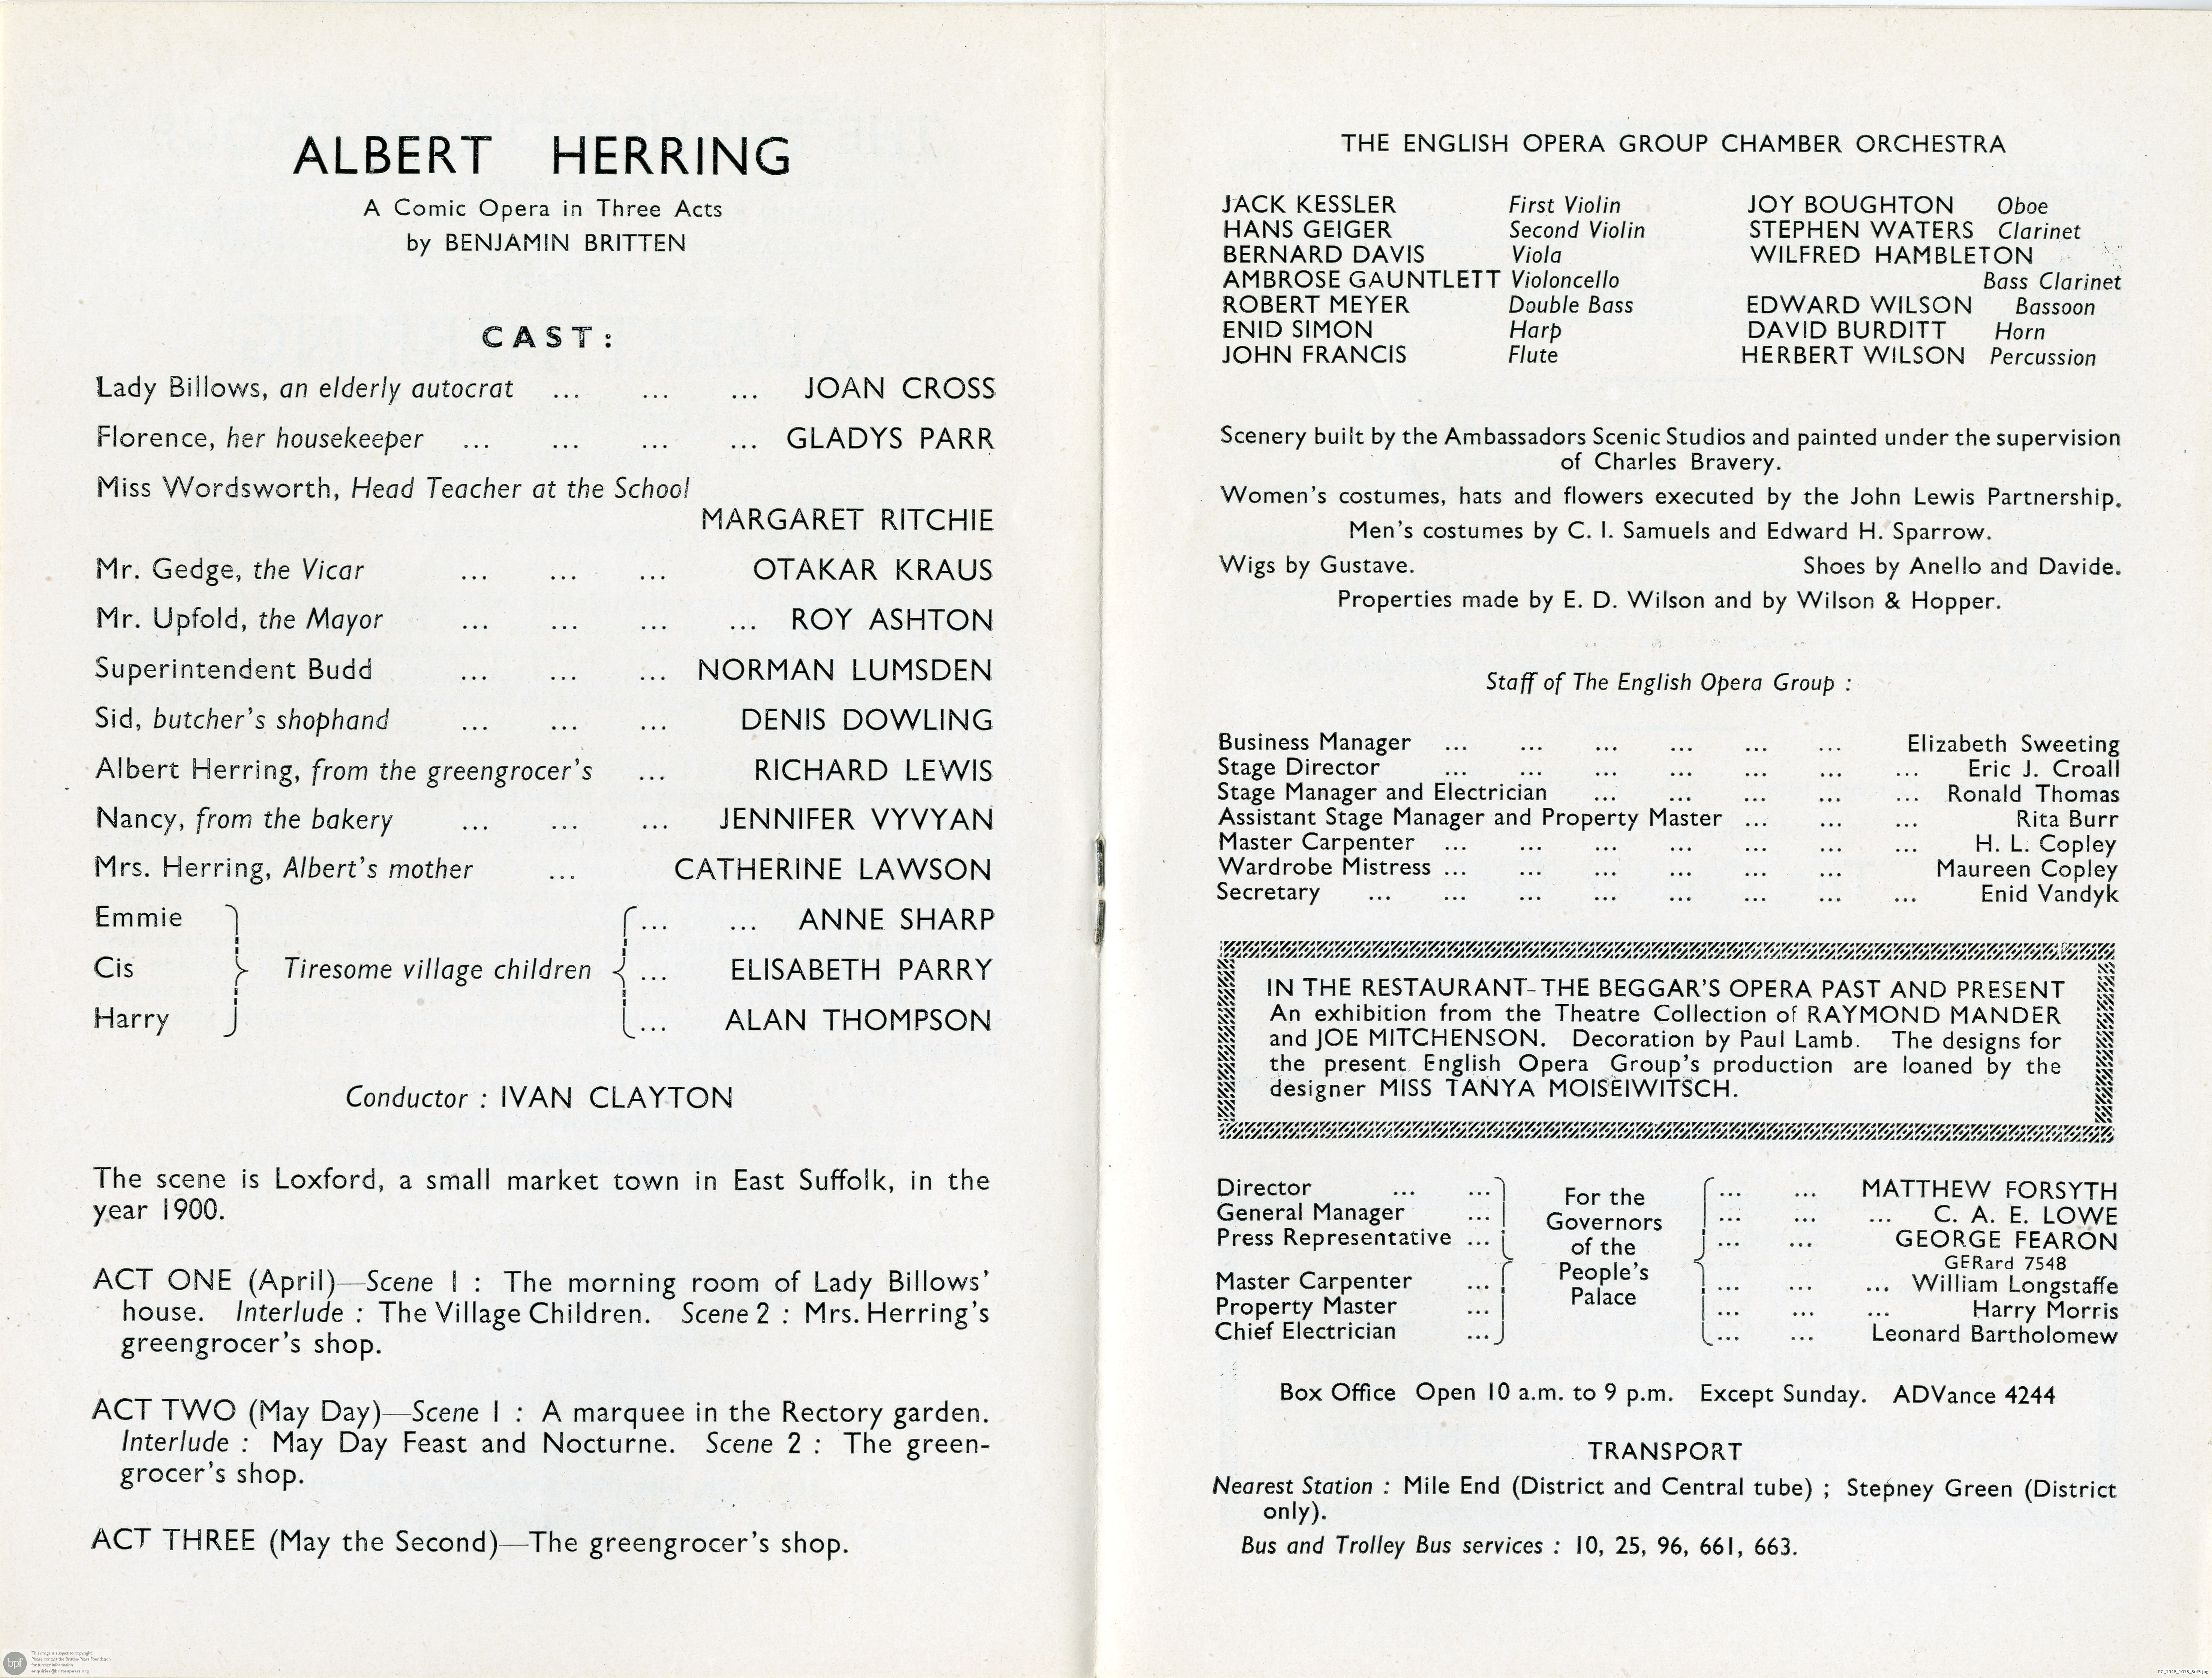 Britten, Albert Herring, People's Palace, London